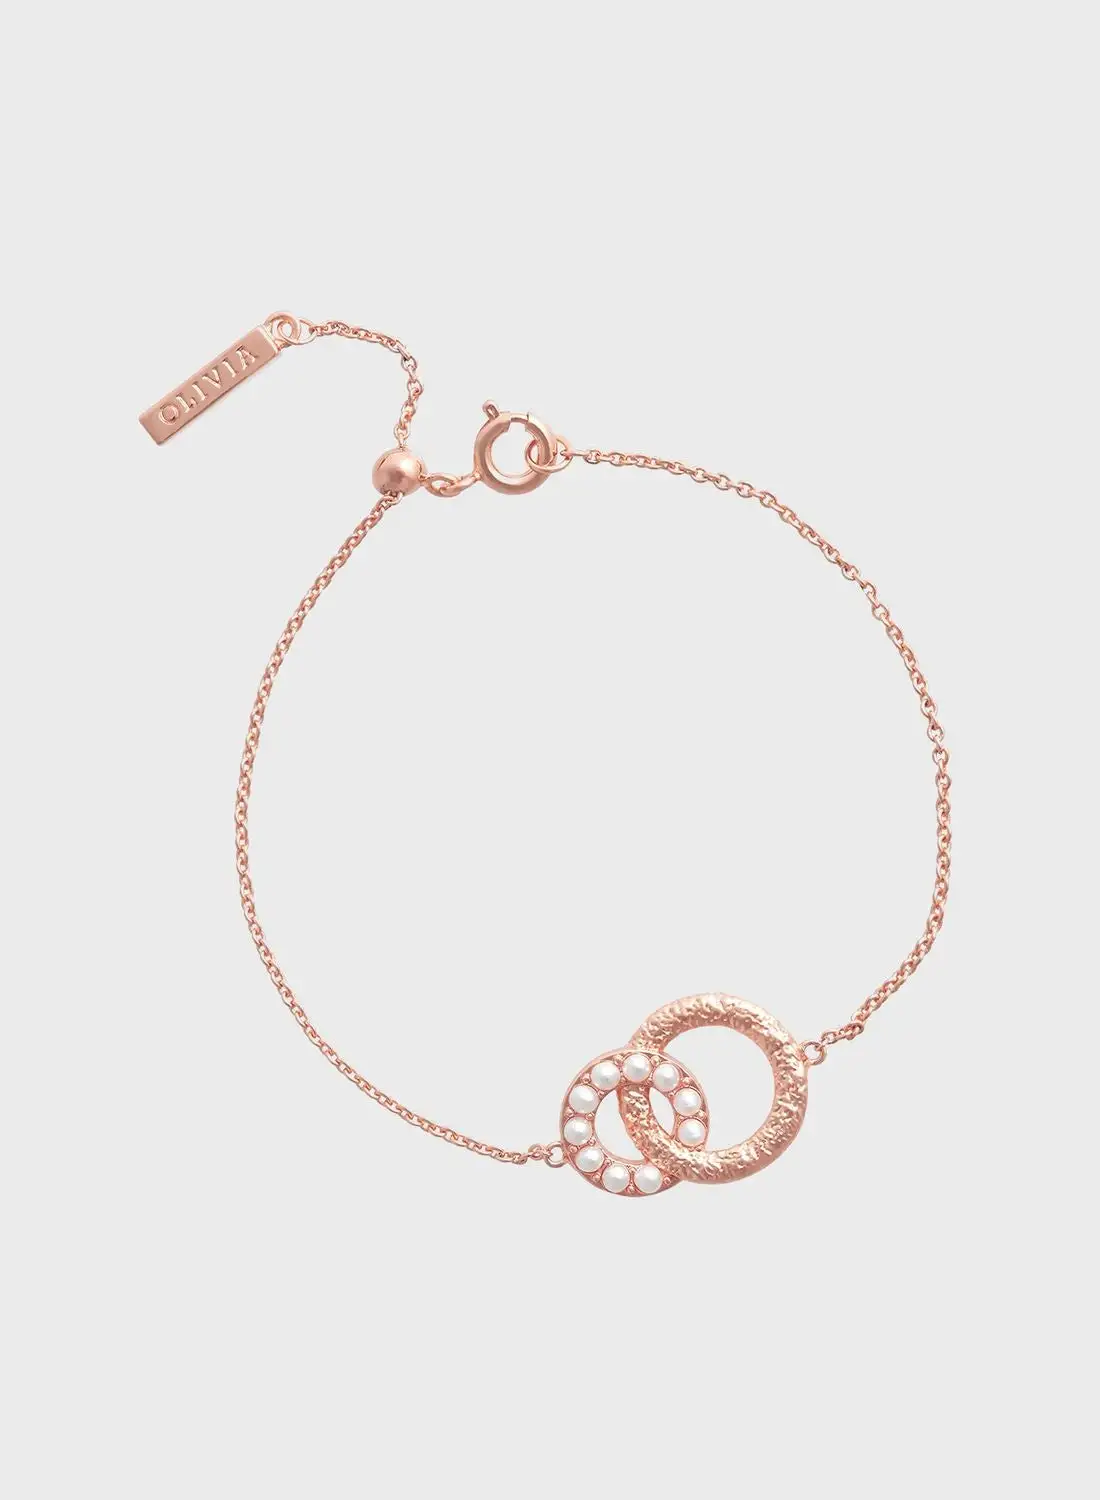 OLIVIA BURTON Pearls Hand Chain Bracelet